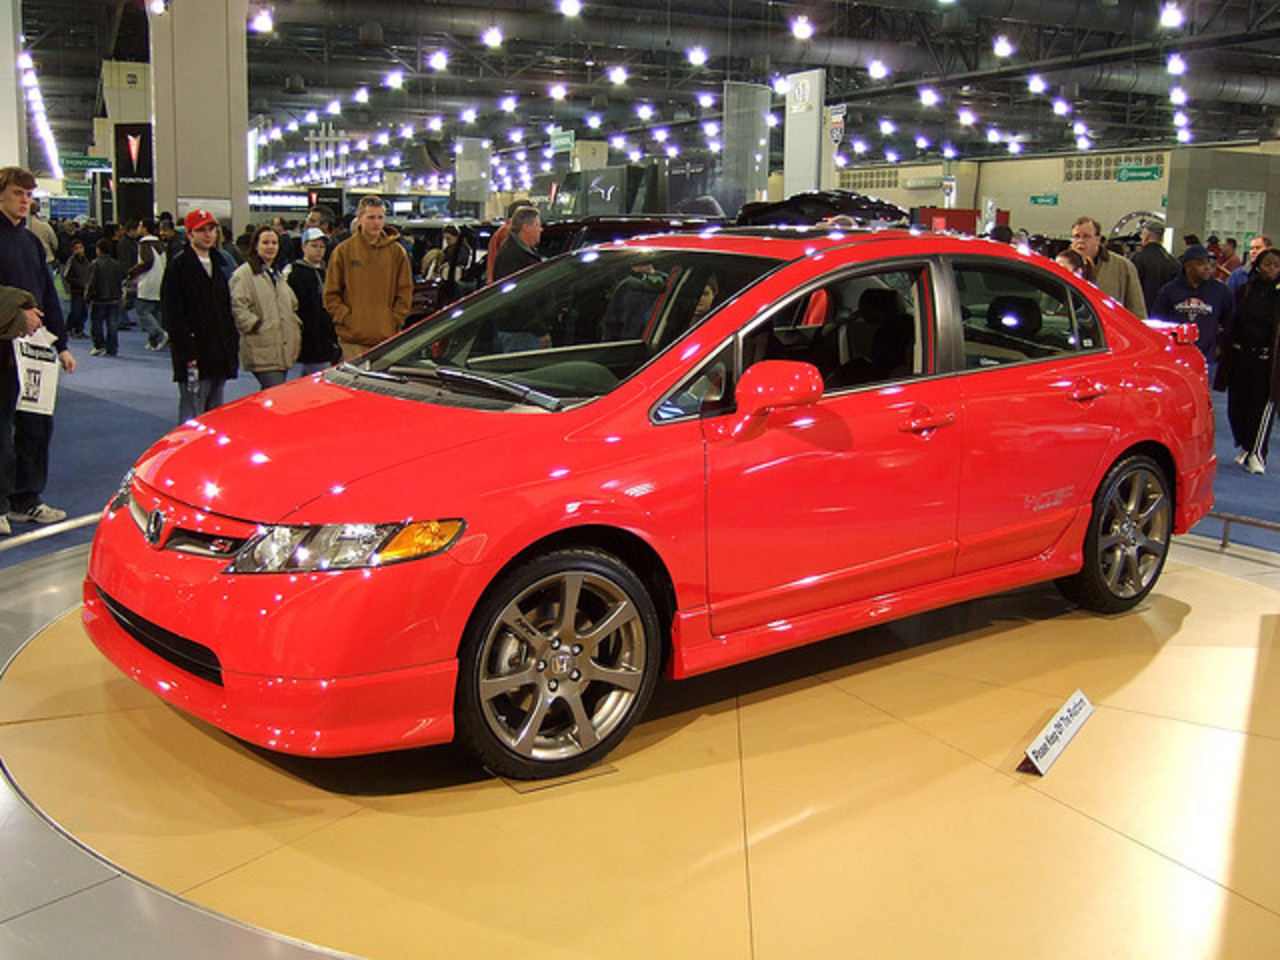 2007 Civic SI Sedan | Flickr - Photo Sharing!